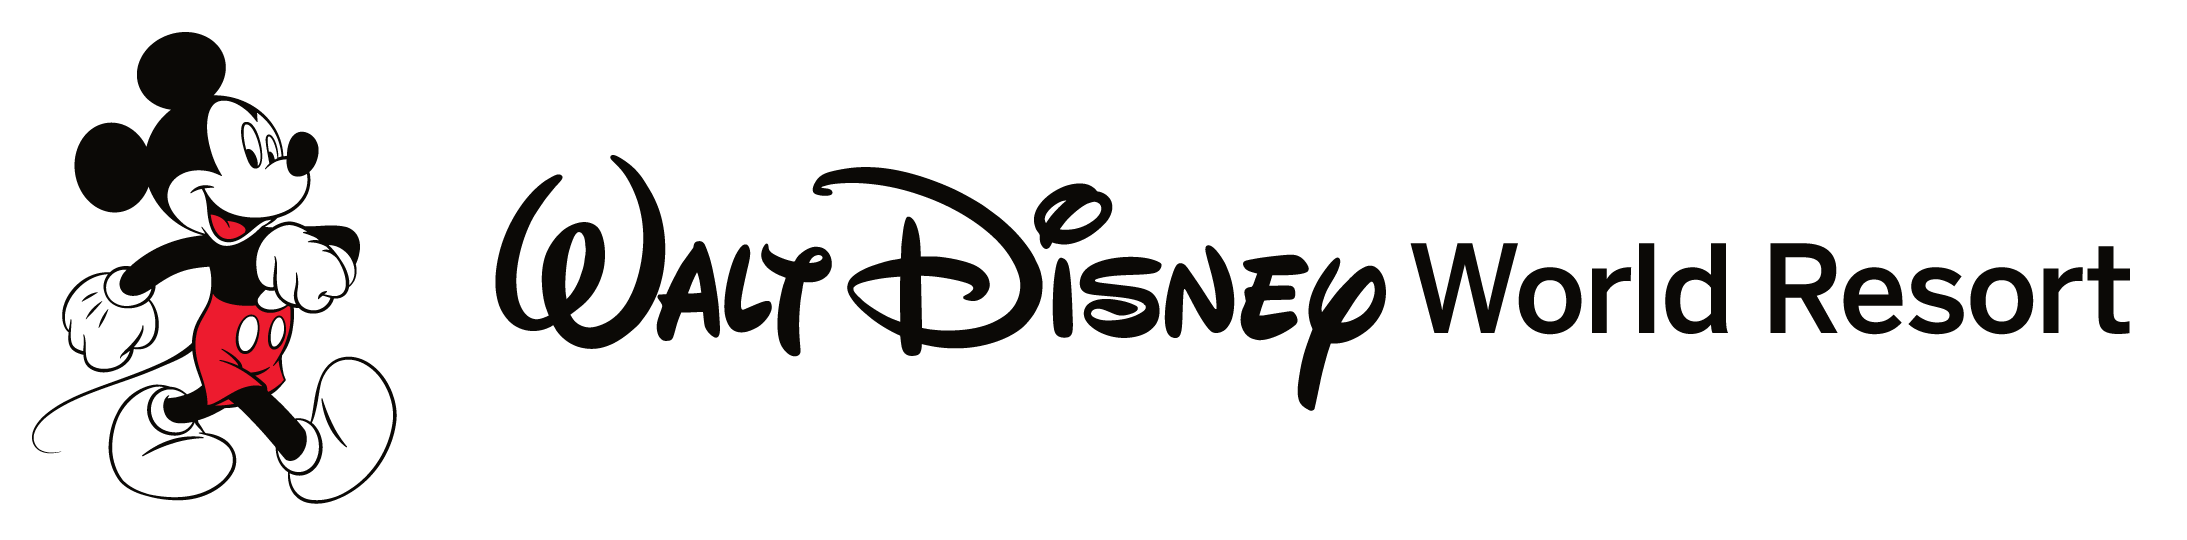 Walt Disney World Company Logo - Walt disney world Logos